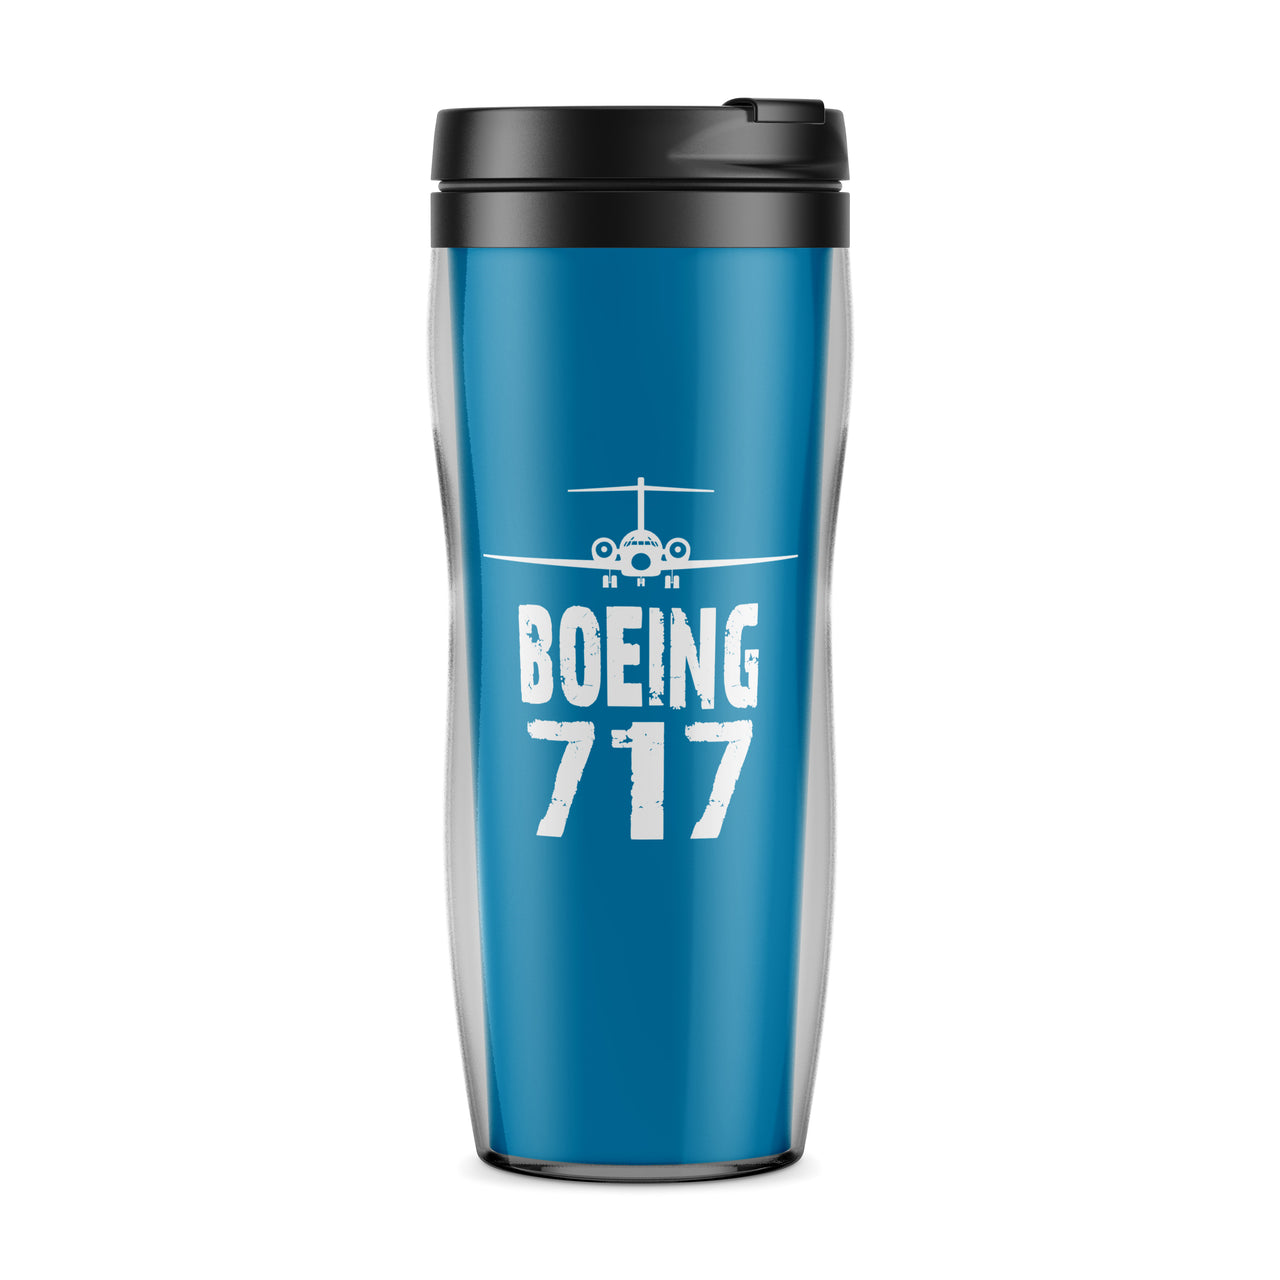 Boeing 717 & Plane Designed Travel Mugs